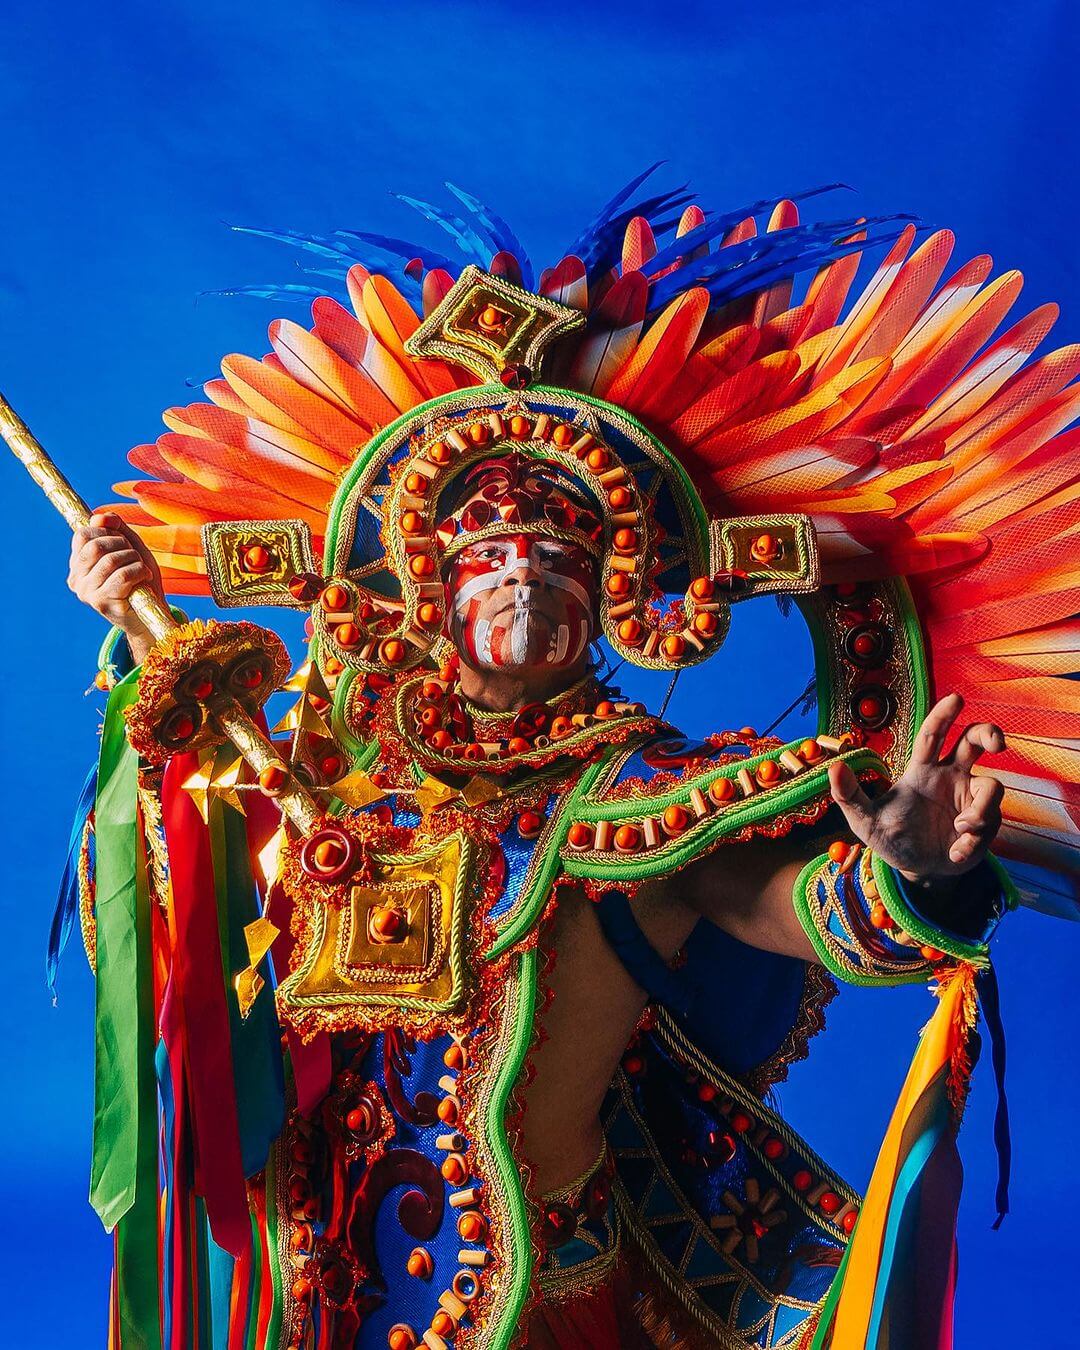 Fantasias de Carnaval: como surgiram, significado - Brasil Escola